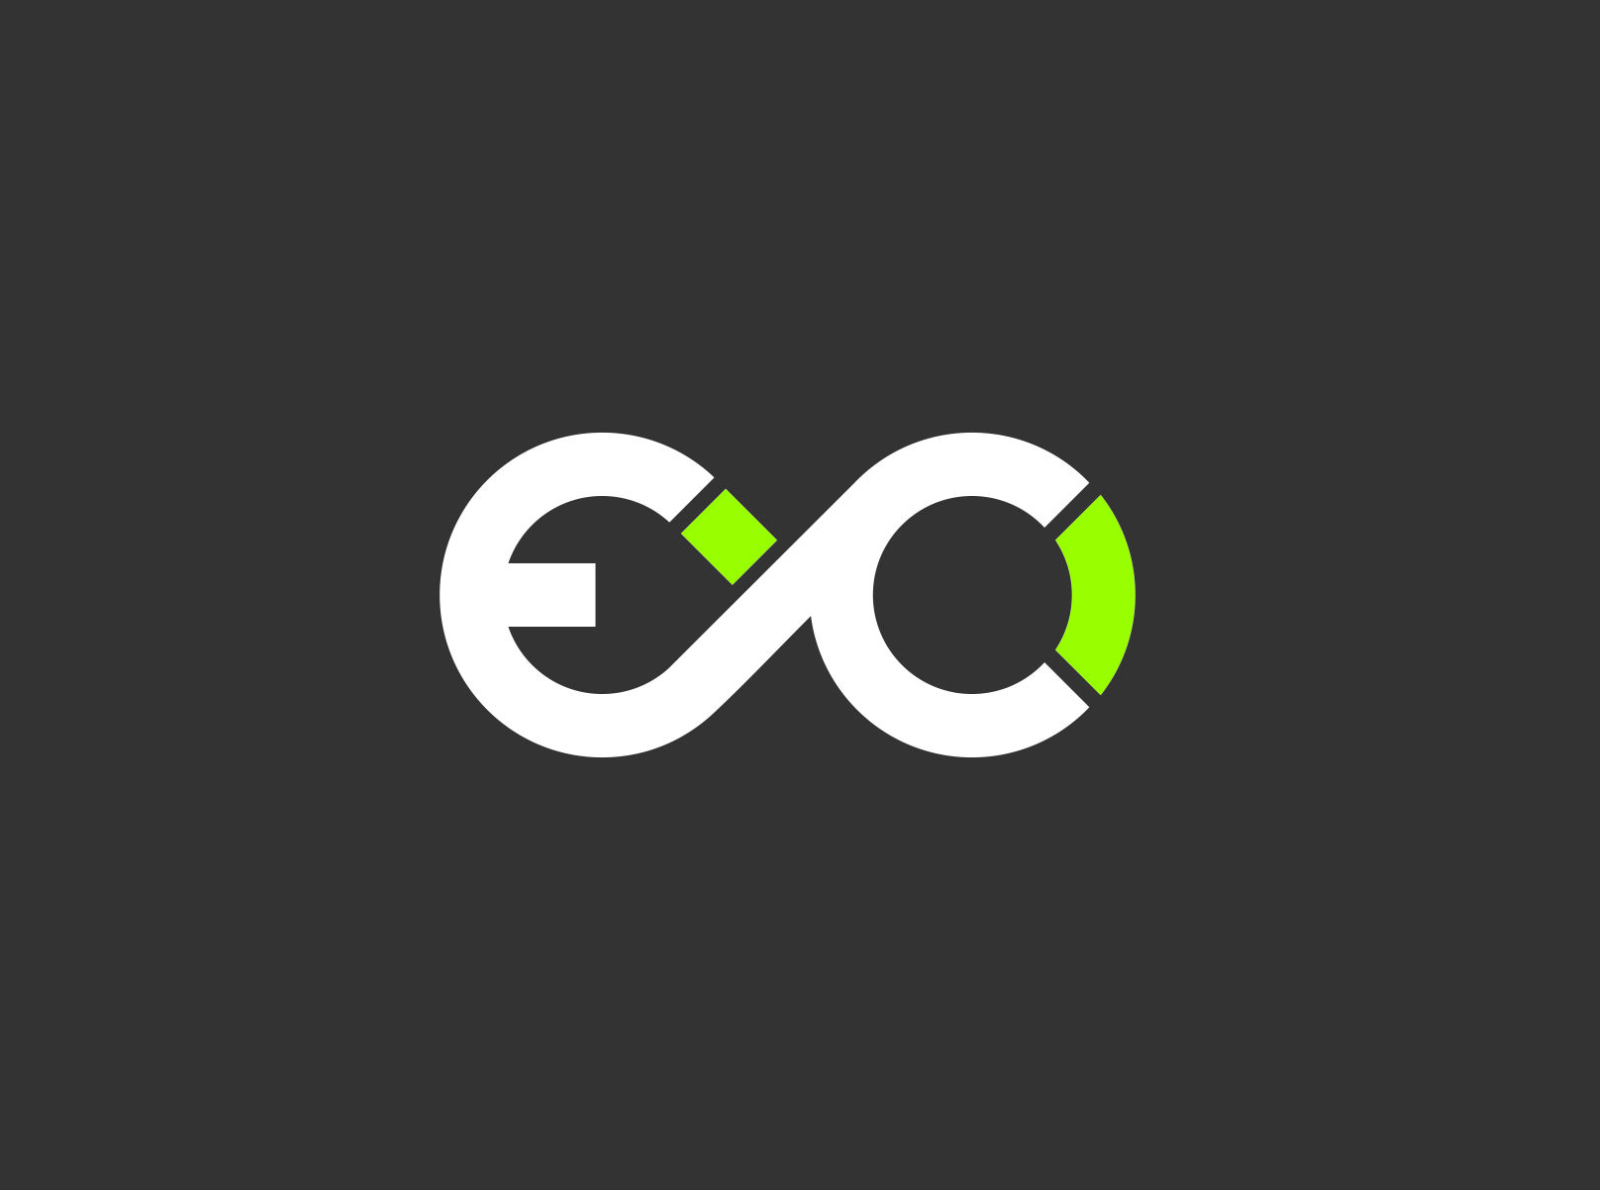 ec-logo-by-arif-rahmanuddin-on-dribbble